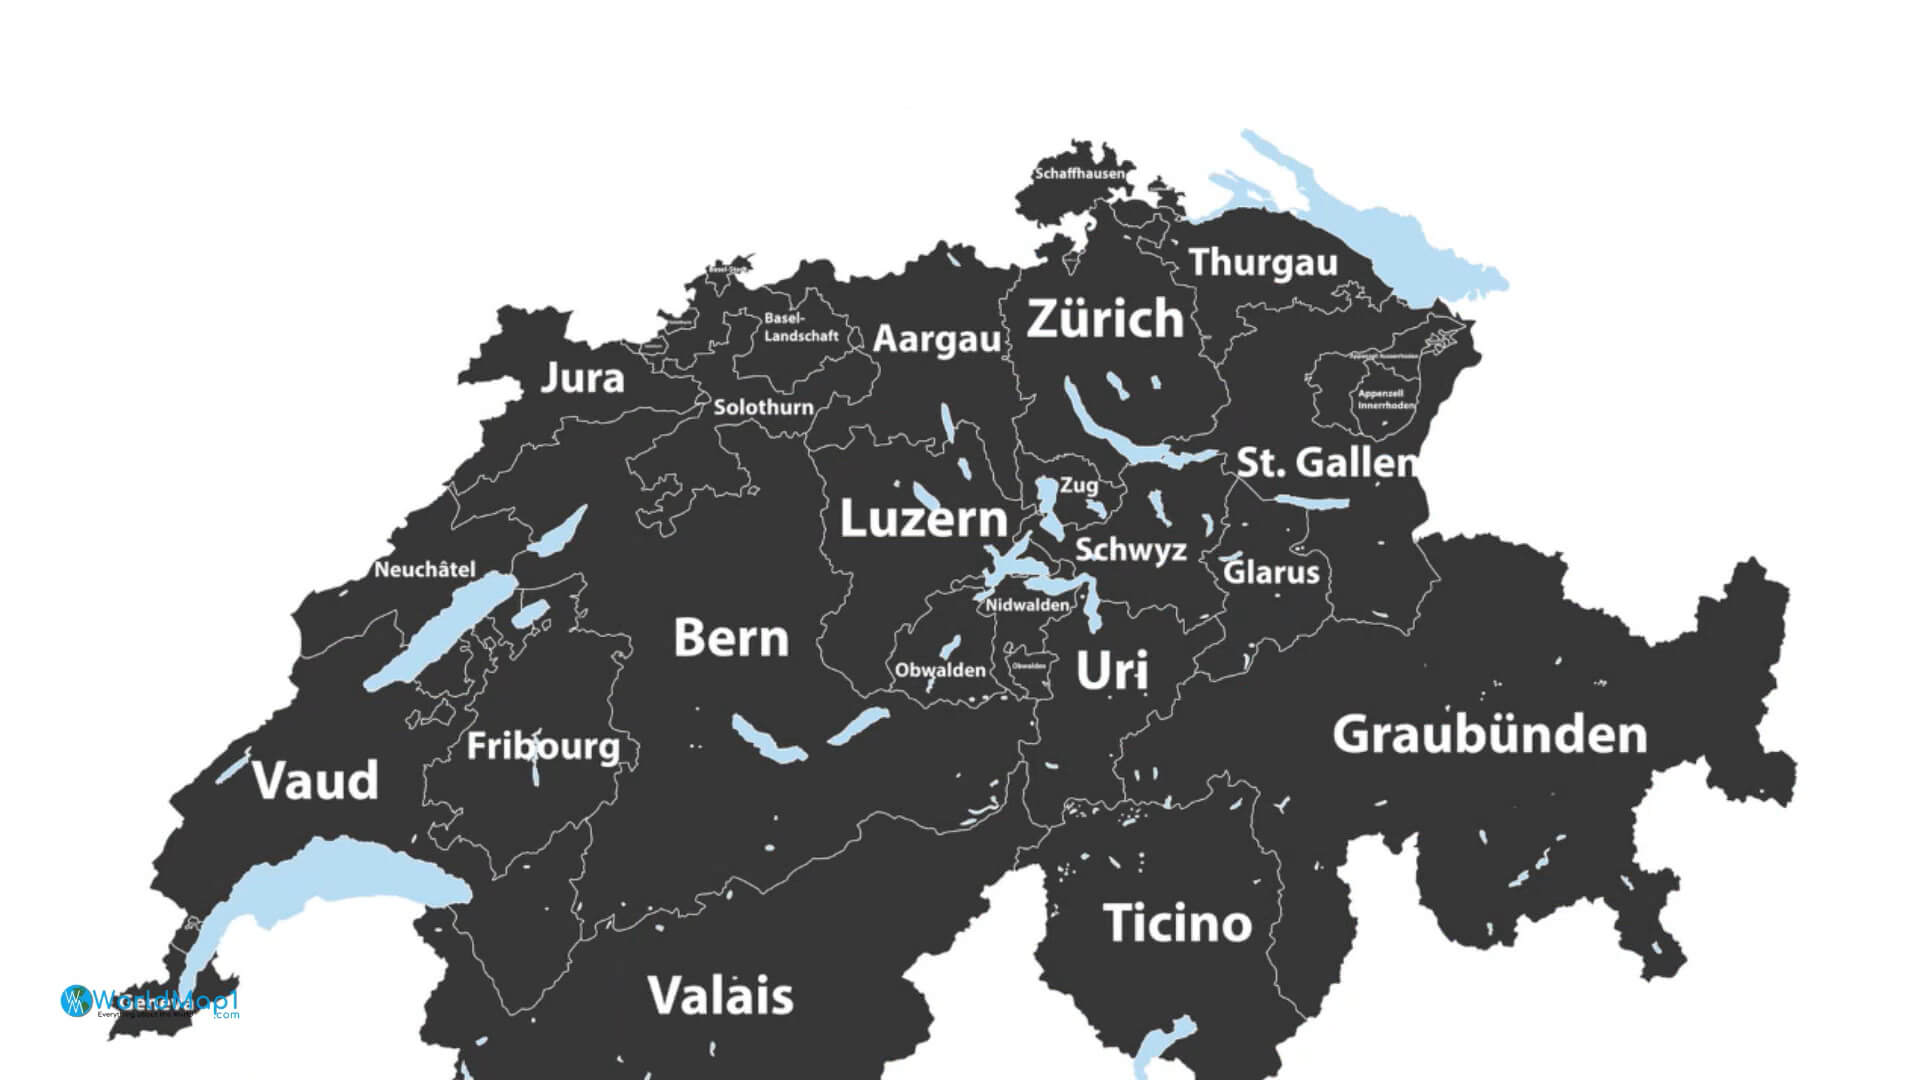 Switzerland Cantons Map